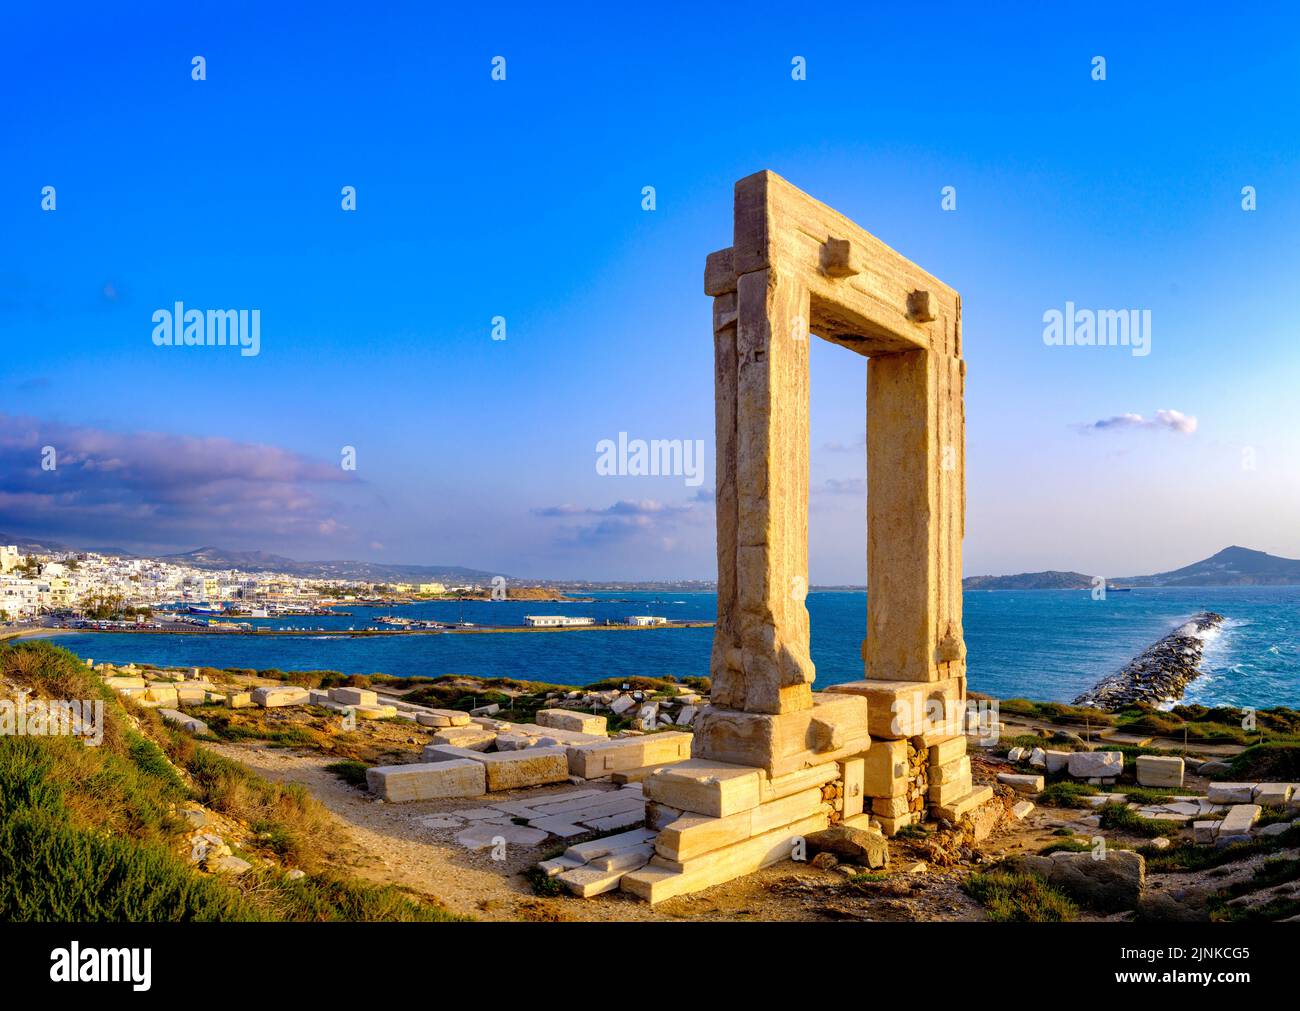 Gate to the Temple of Apollo, Ancient Portara, Naxos Island  The Chora,Old Town of Naxos,Capital Cyclades Island,Greece,Europe  Aegean Sea,Mediterrane Stock Photo